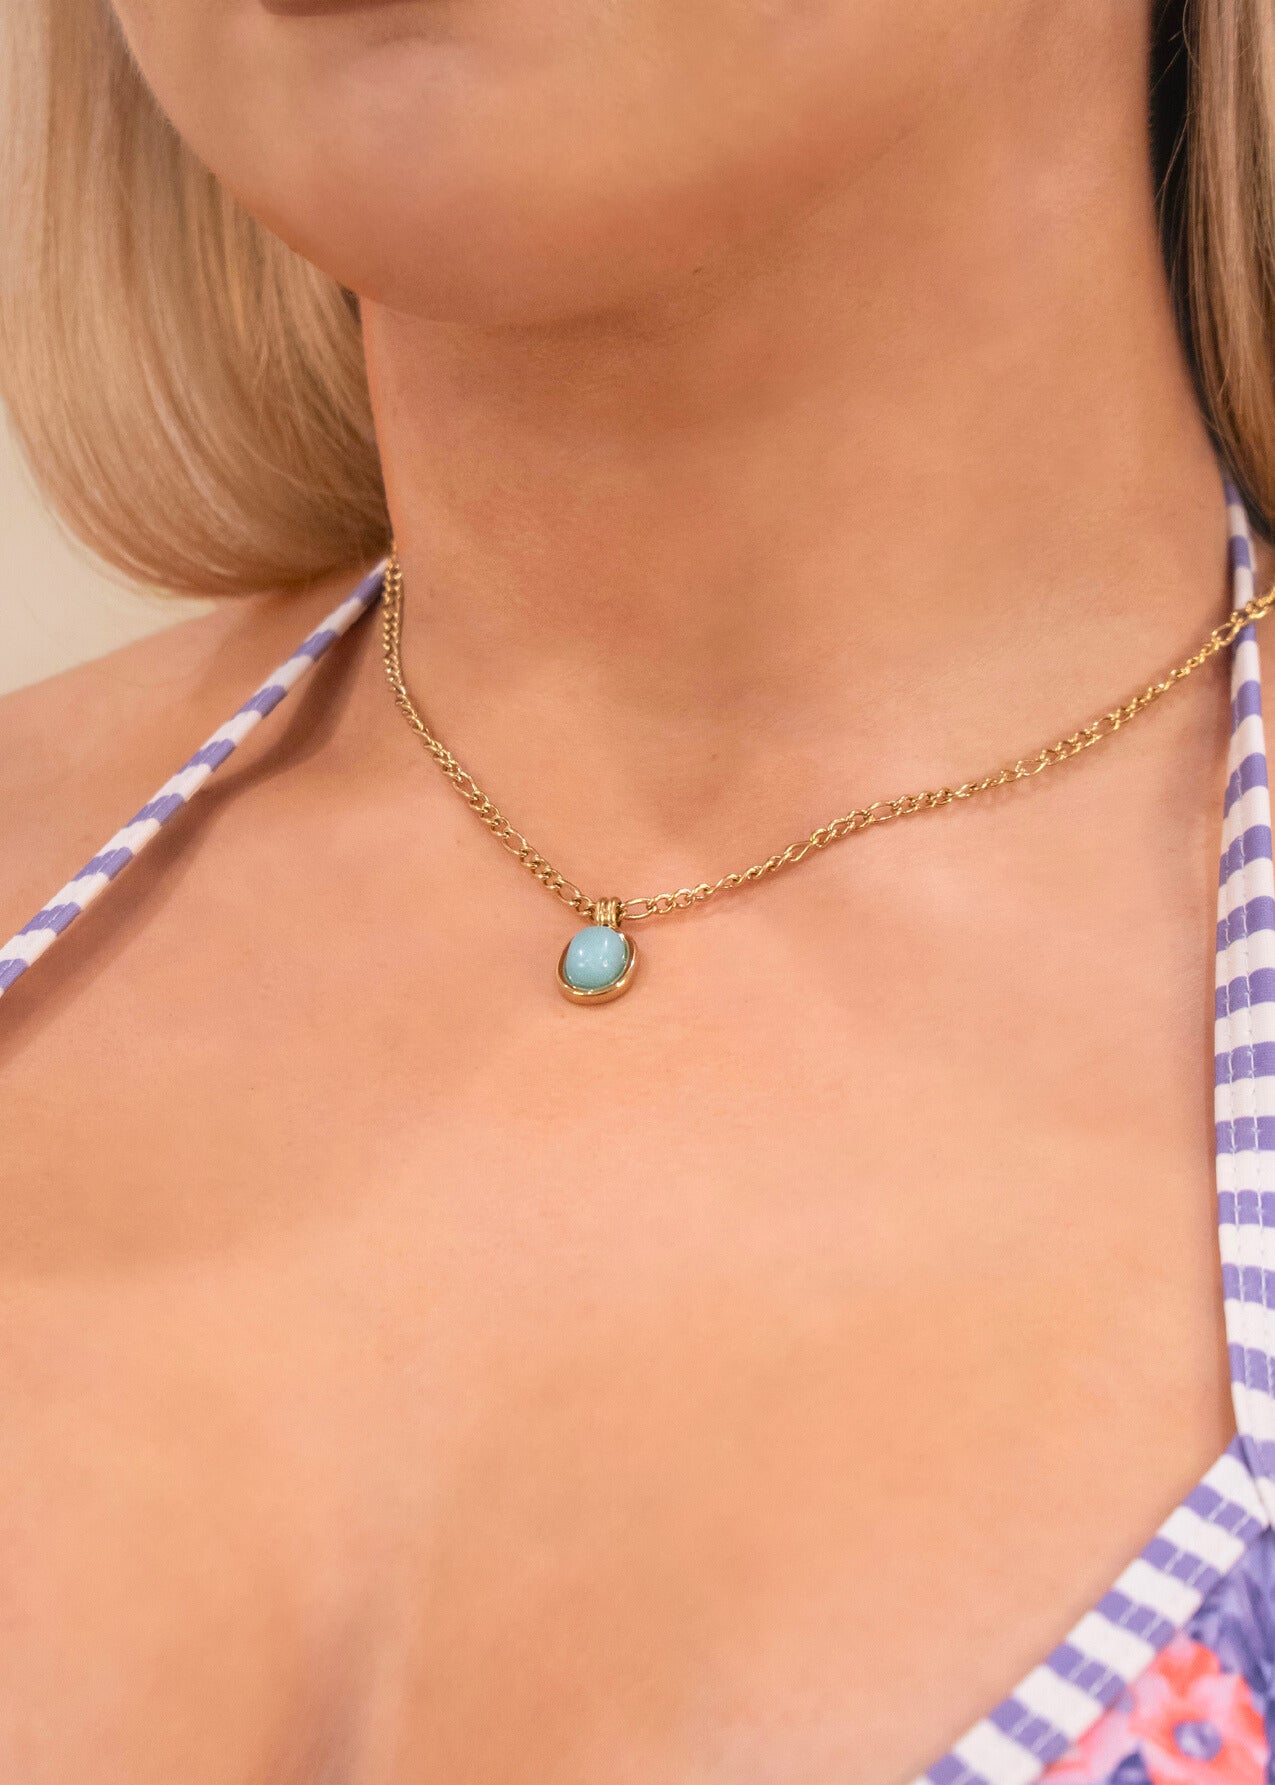 Aqua Sea Pendant Necklace